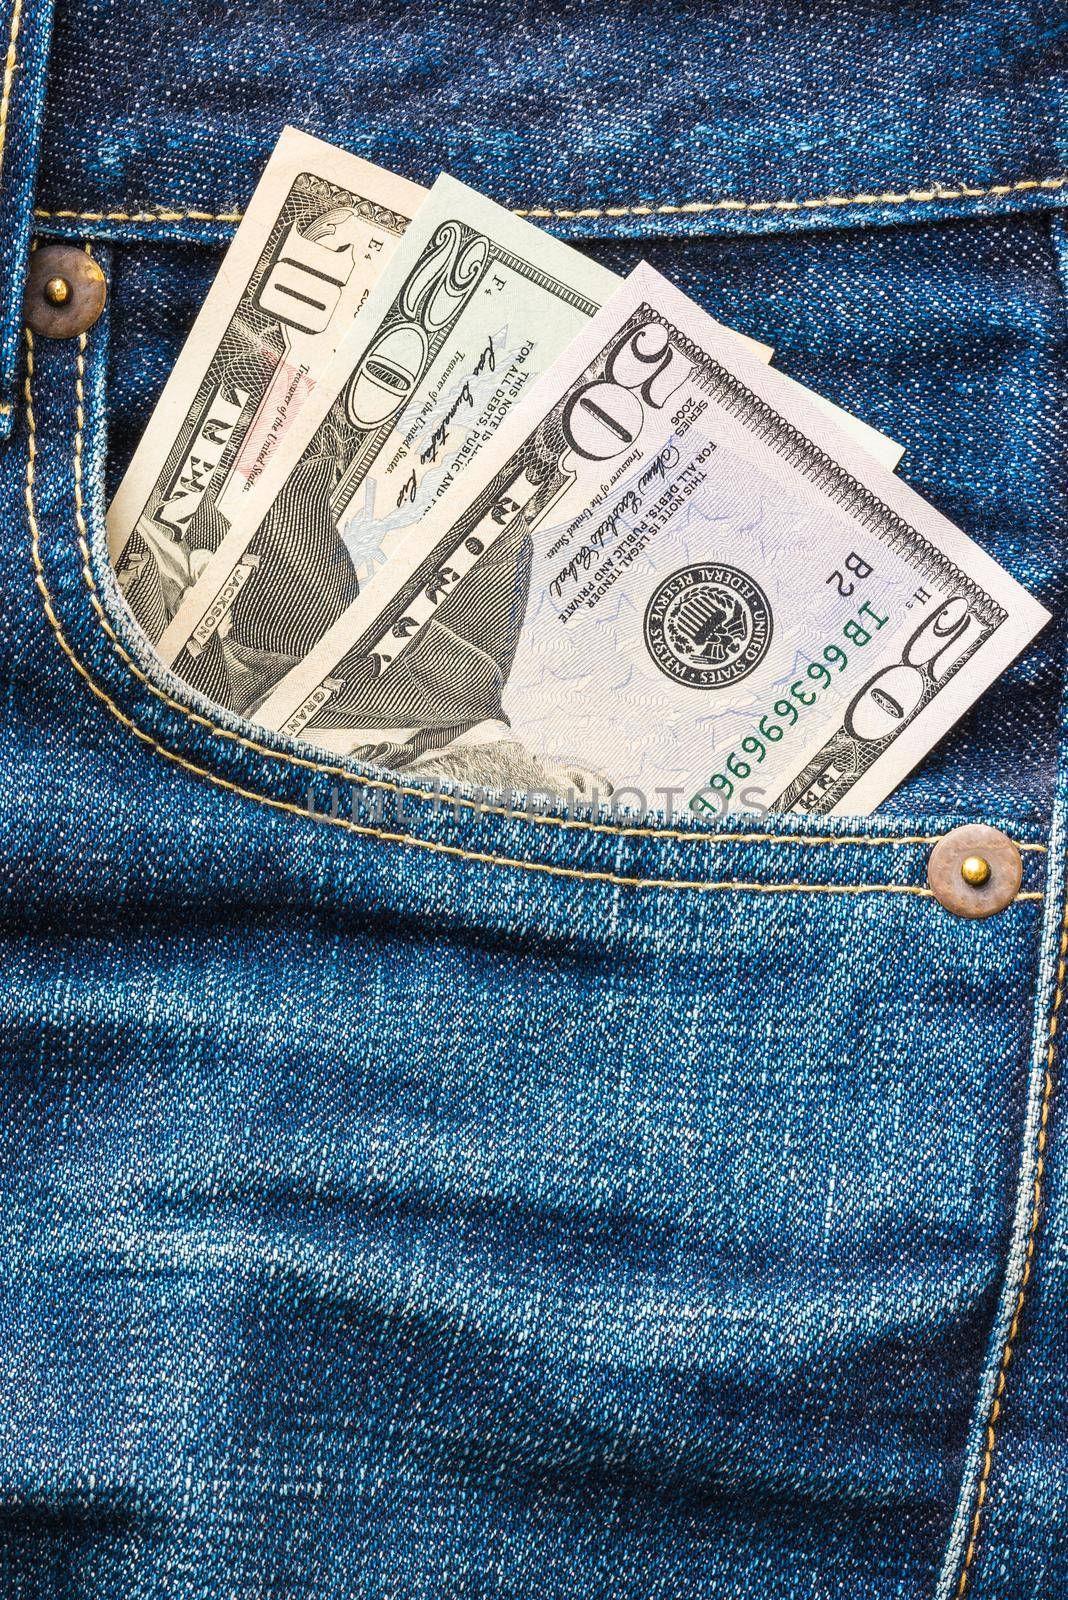 American US Dollar money in the indigo blue jeans pocket. by Nuamfolio